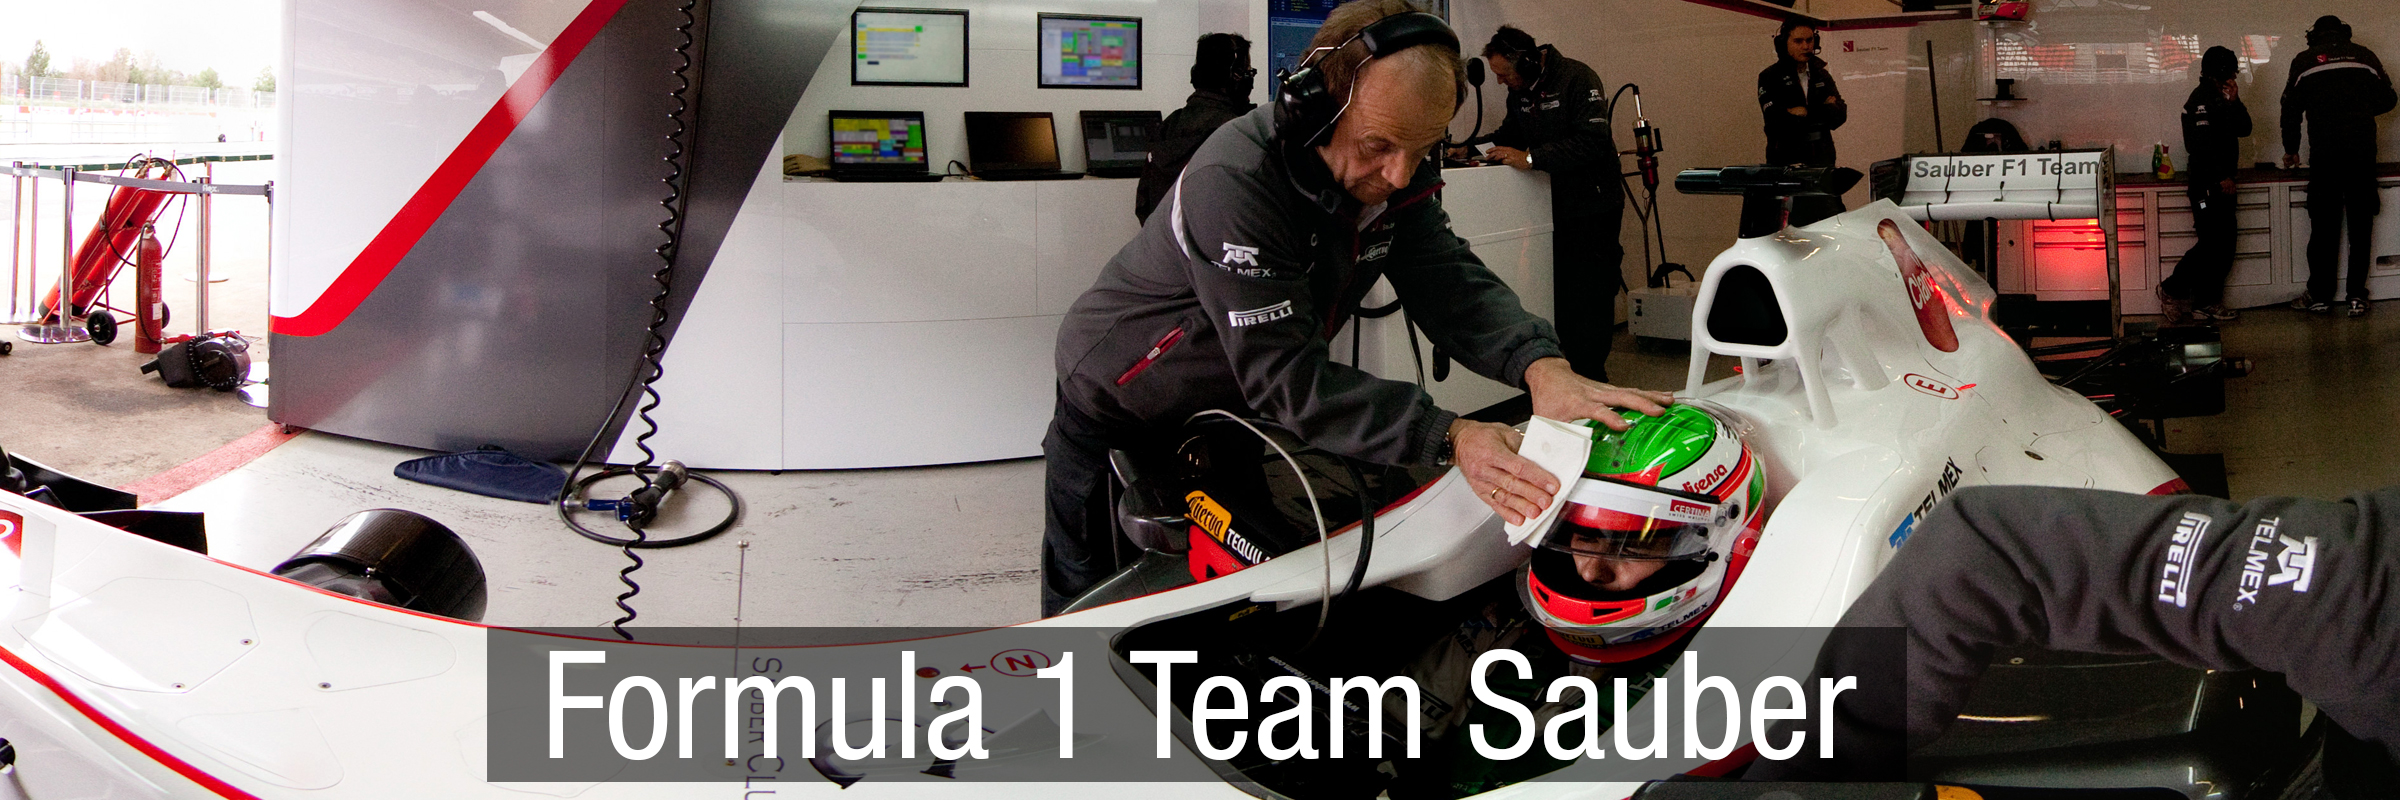 Formula 1 Team Sauber